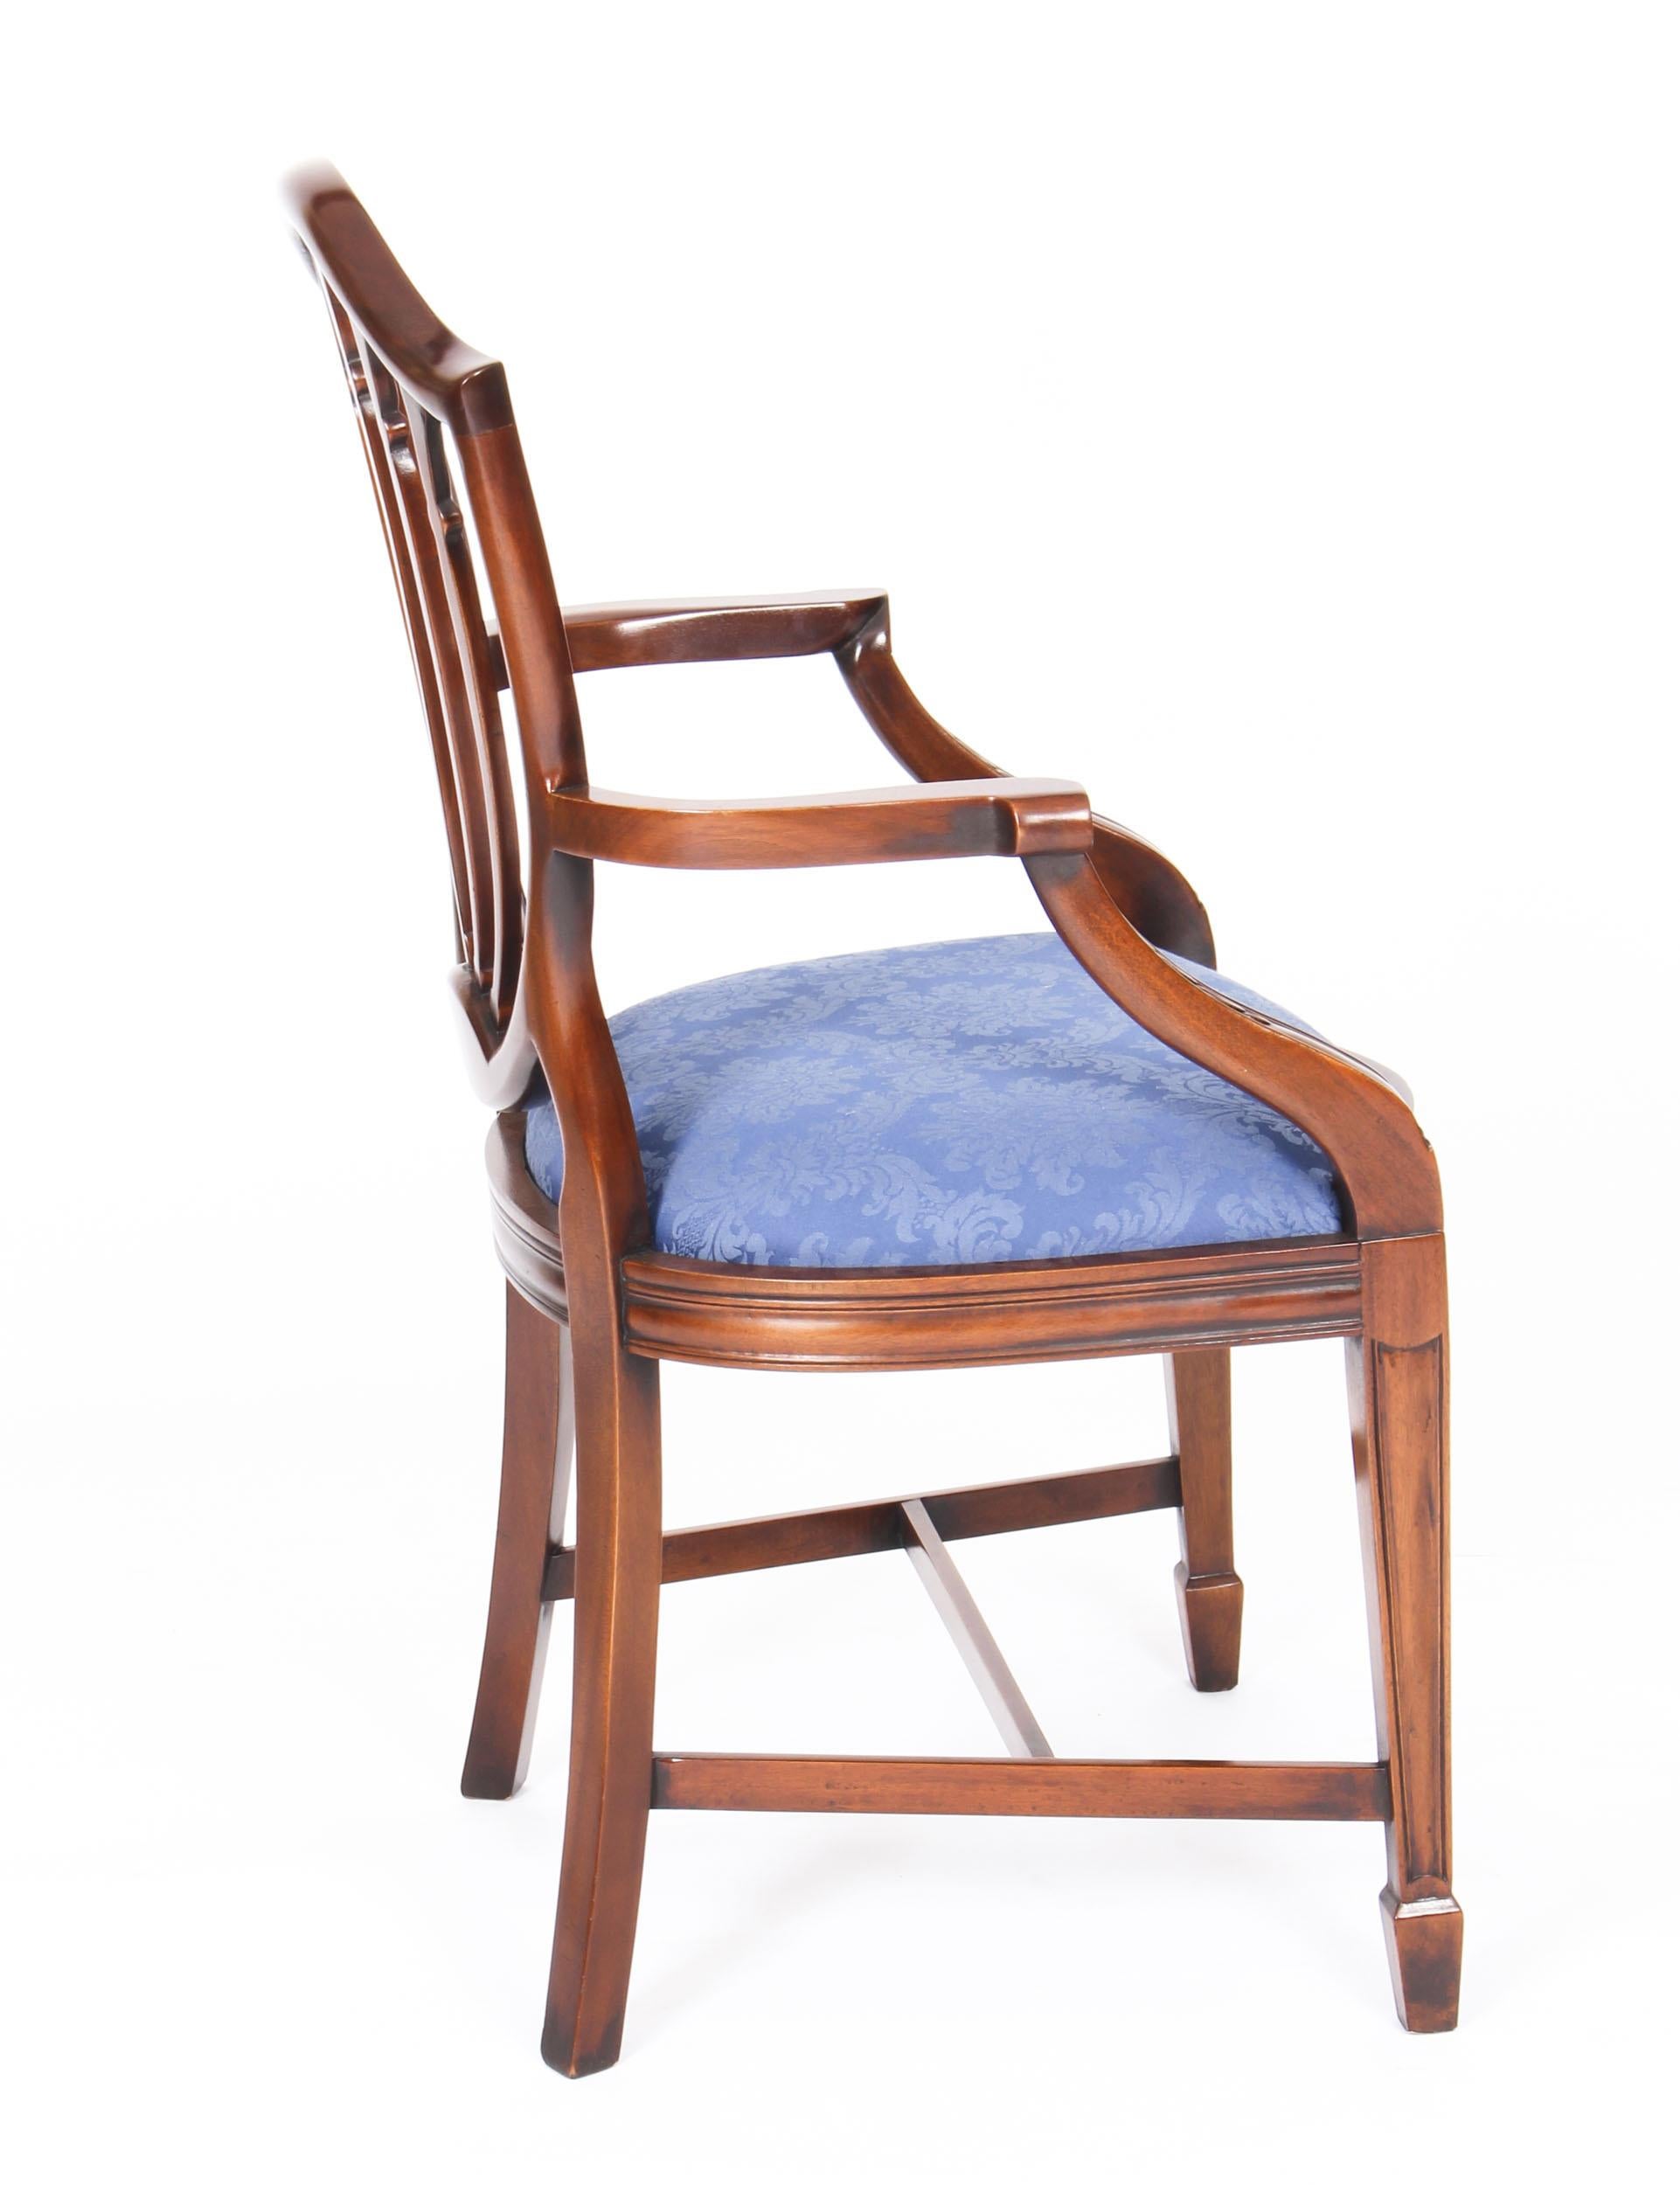 Damask Bespoke Set 12 English Hepplewhite Revival Dining Chairs 20th Century